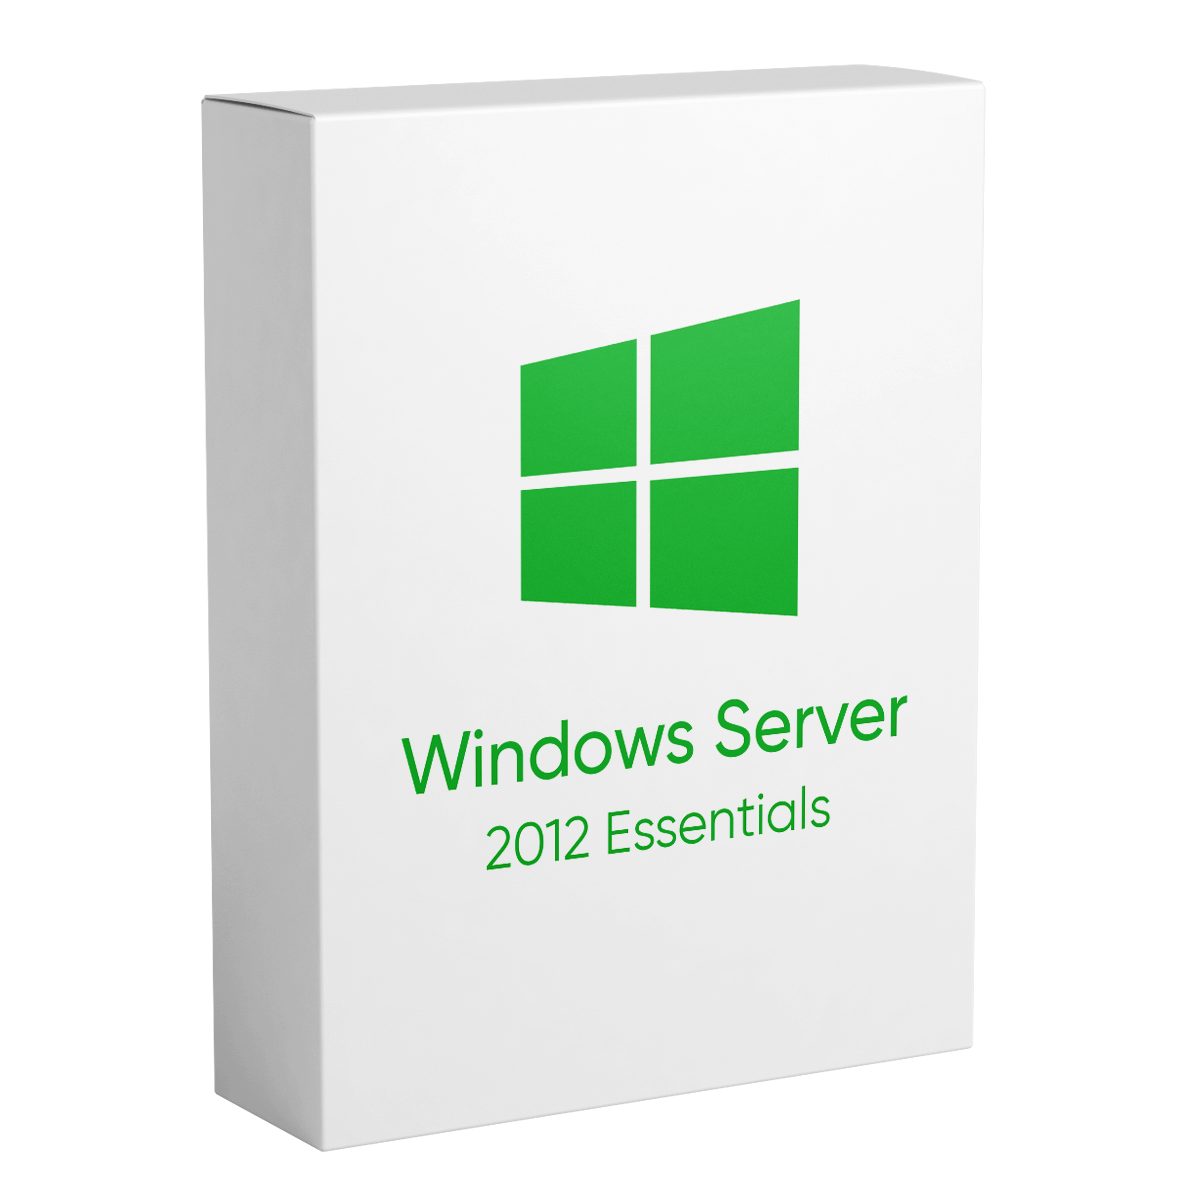 Windows Server 2012 Essentials - Lifetime License For 1 PC